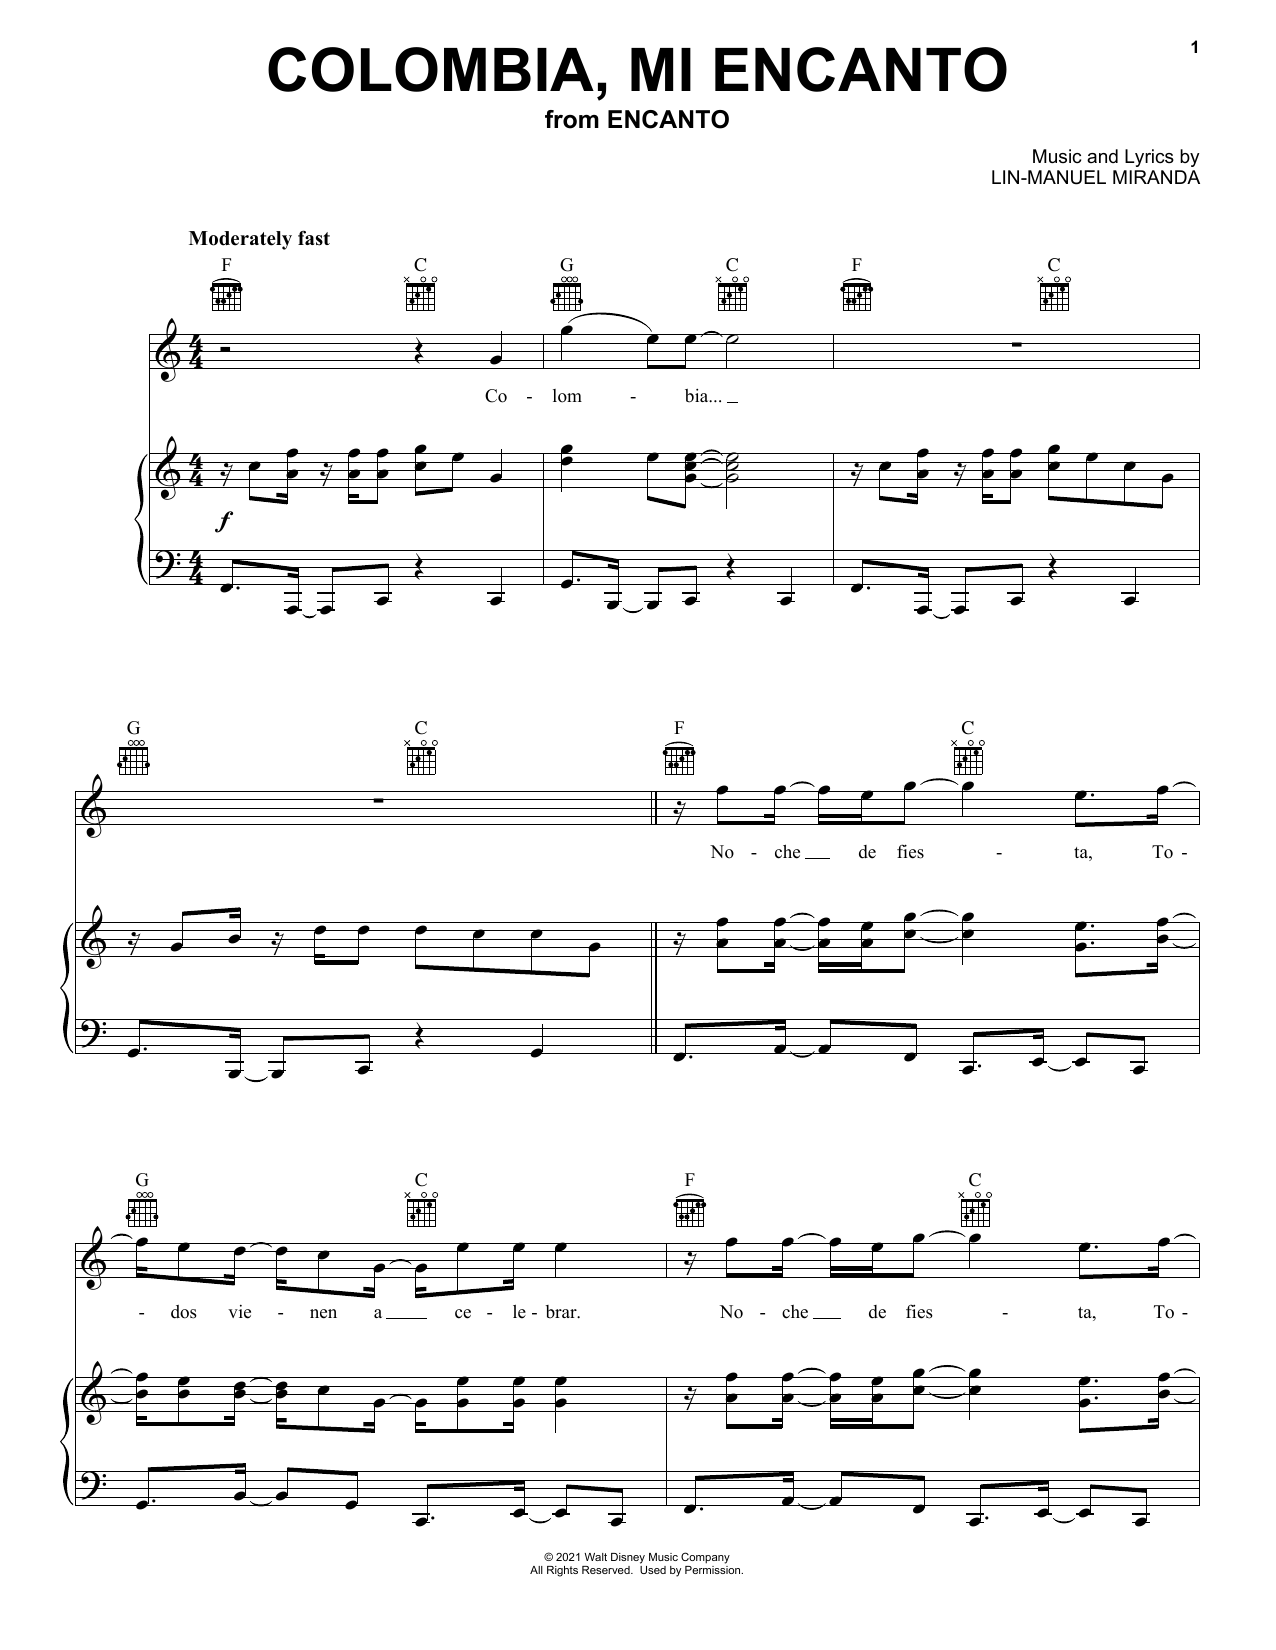 Lin-Manuel Miranda Colombia, Mi Encanto (from Encanto) Sheet Music Notes & Chords for Violin Solo - Download or Print PDF